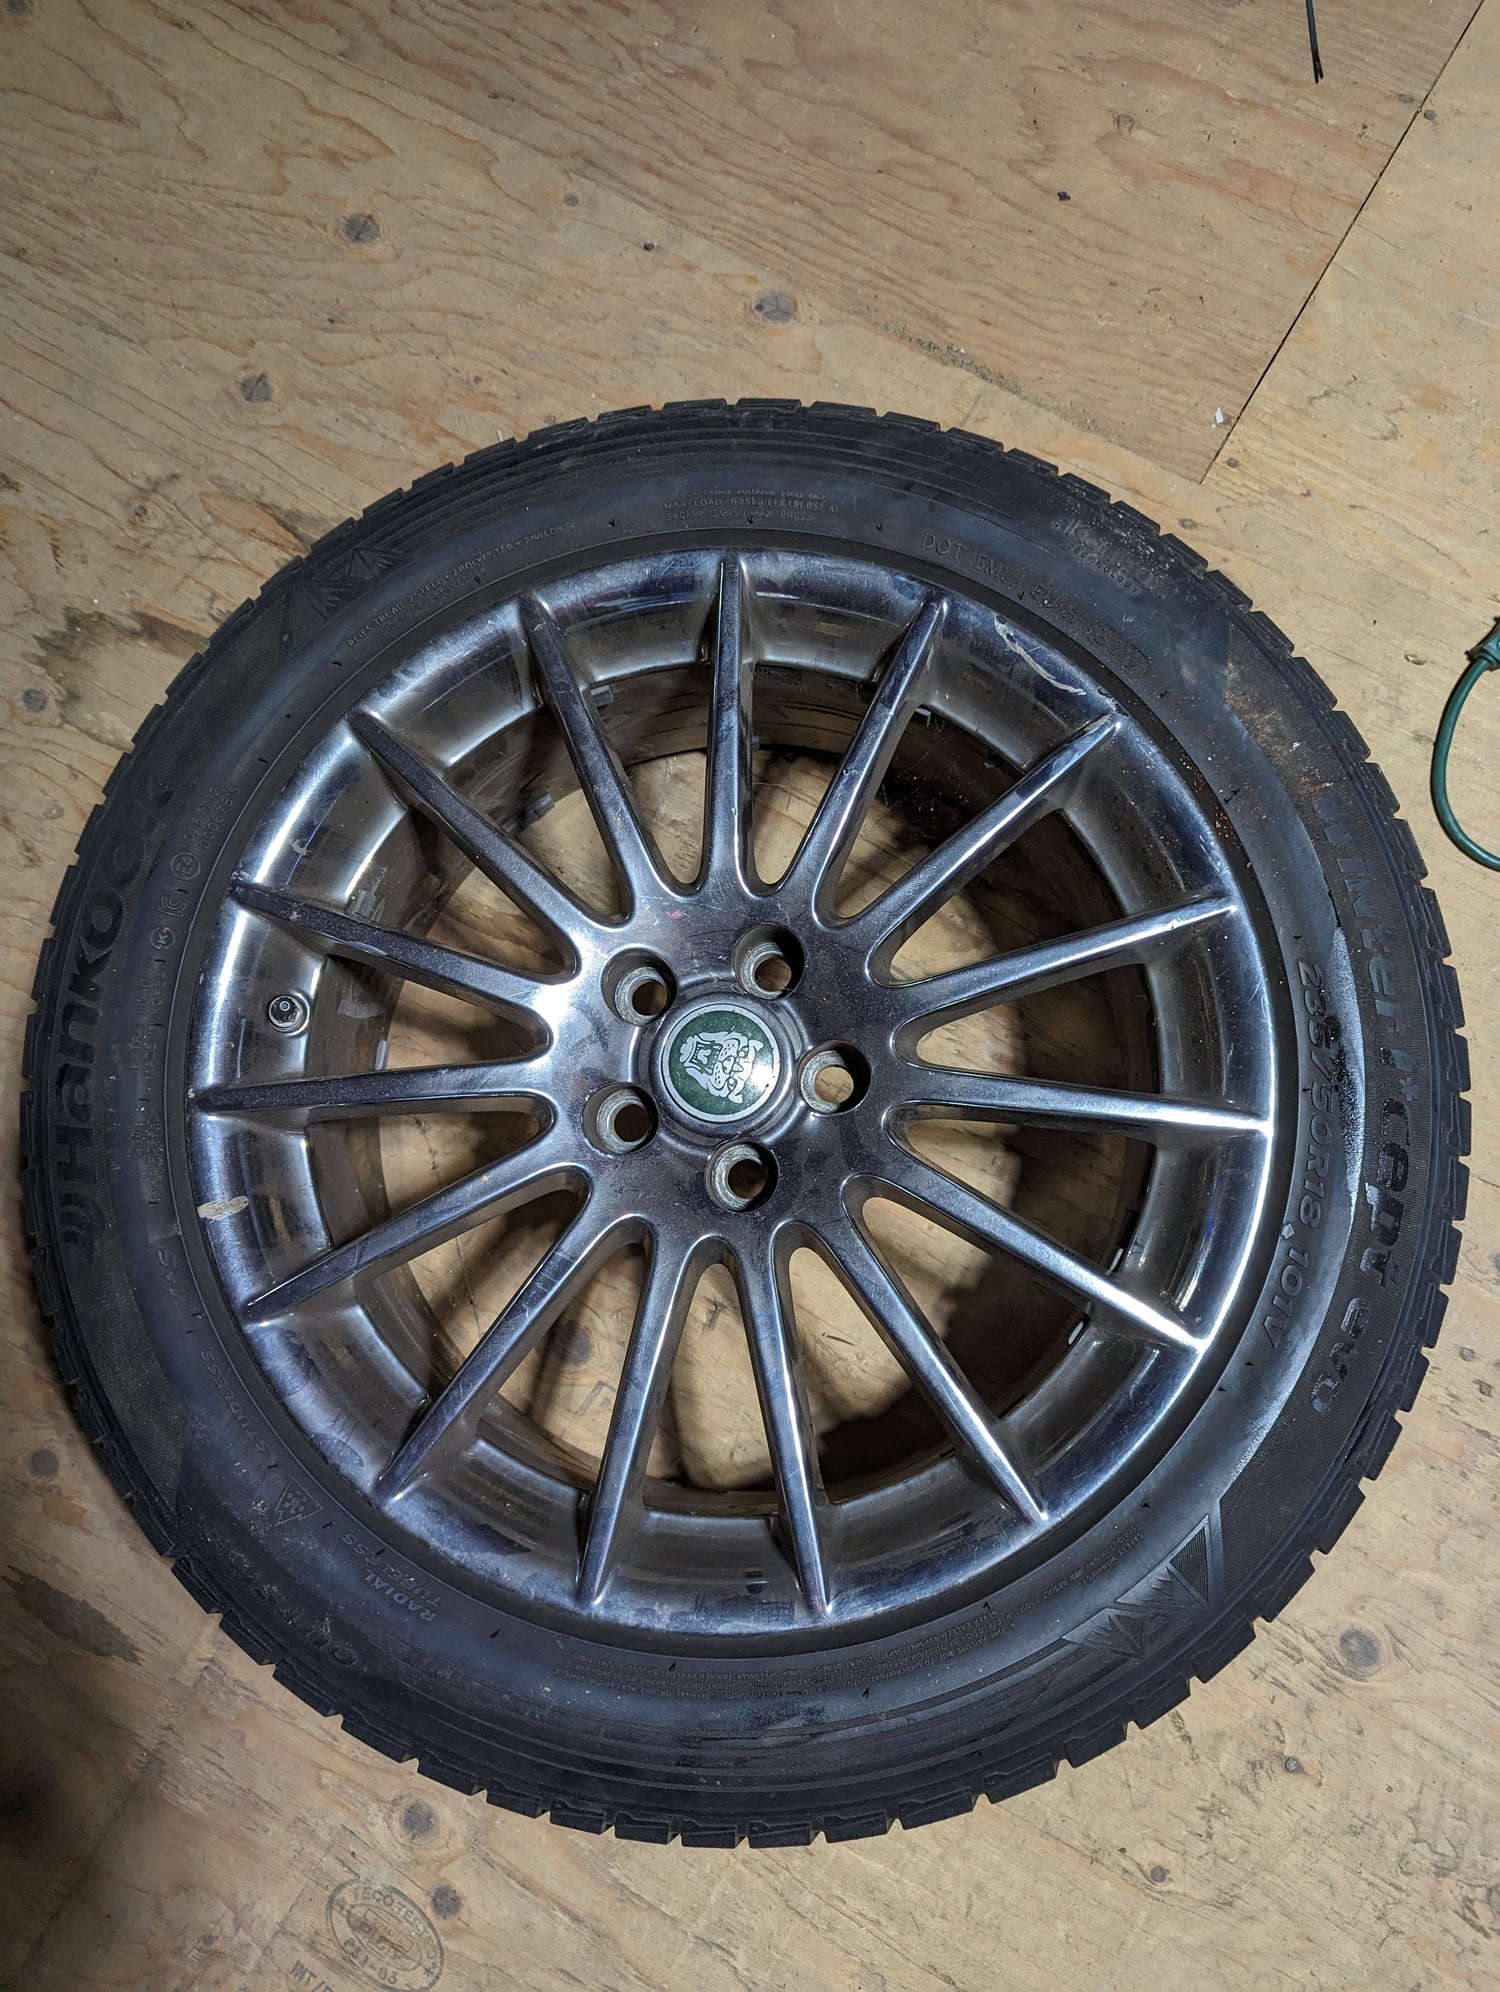 Wheels and Tires/Axles - XJ8 18” Snow tires & wheels set - Used - 2003 to 2009 Jaguar XJ8 - Birmingham, MI 48009, United States